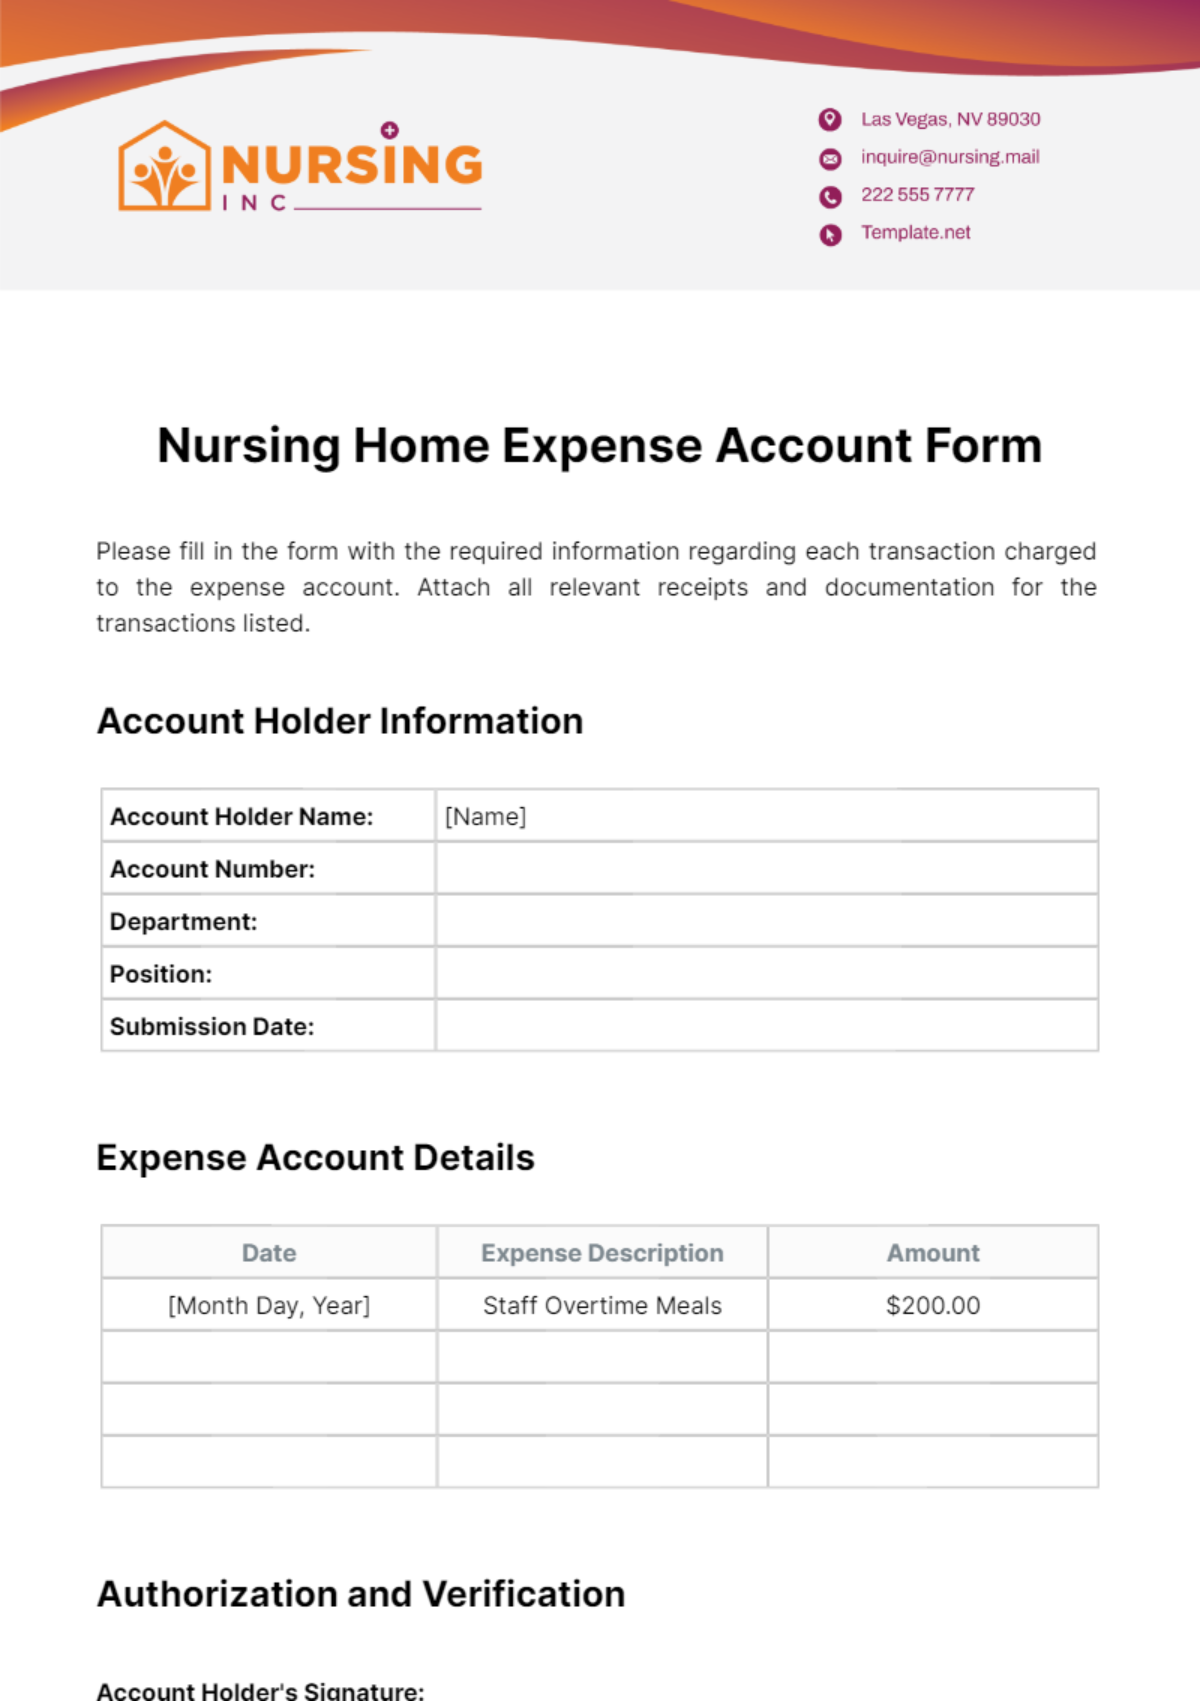 Nursing Home Expense Account Form Template